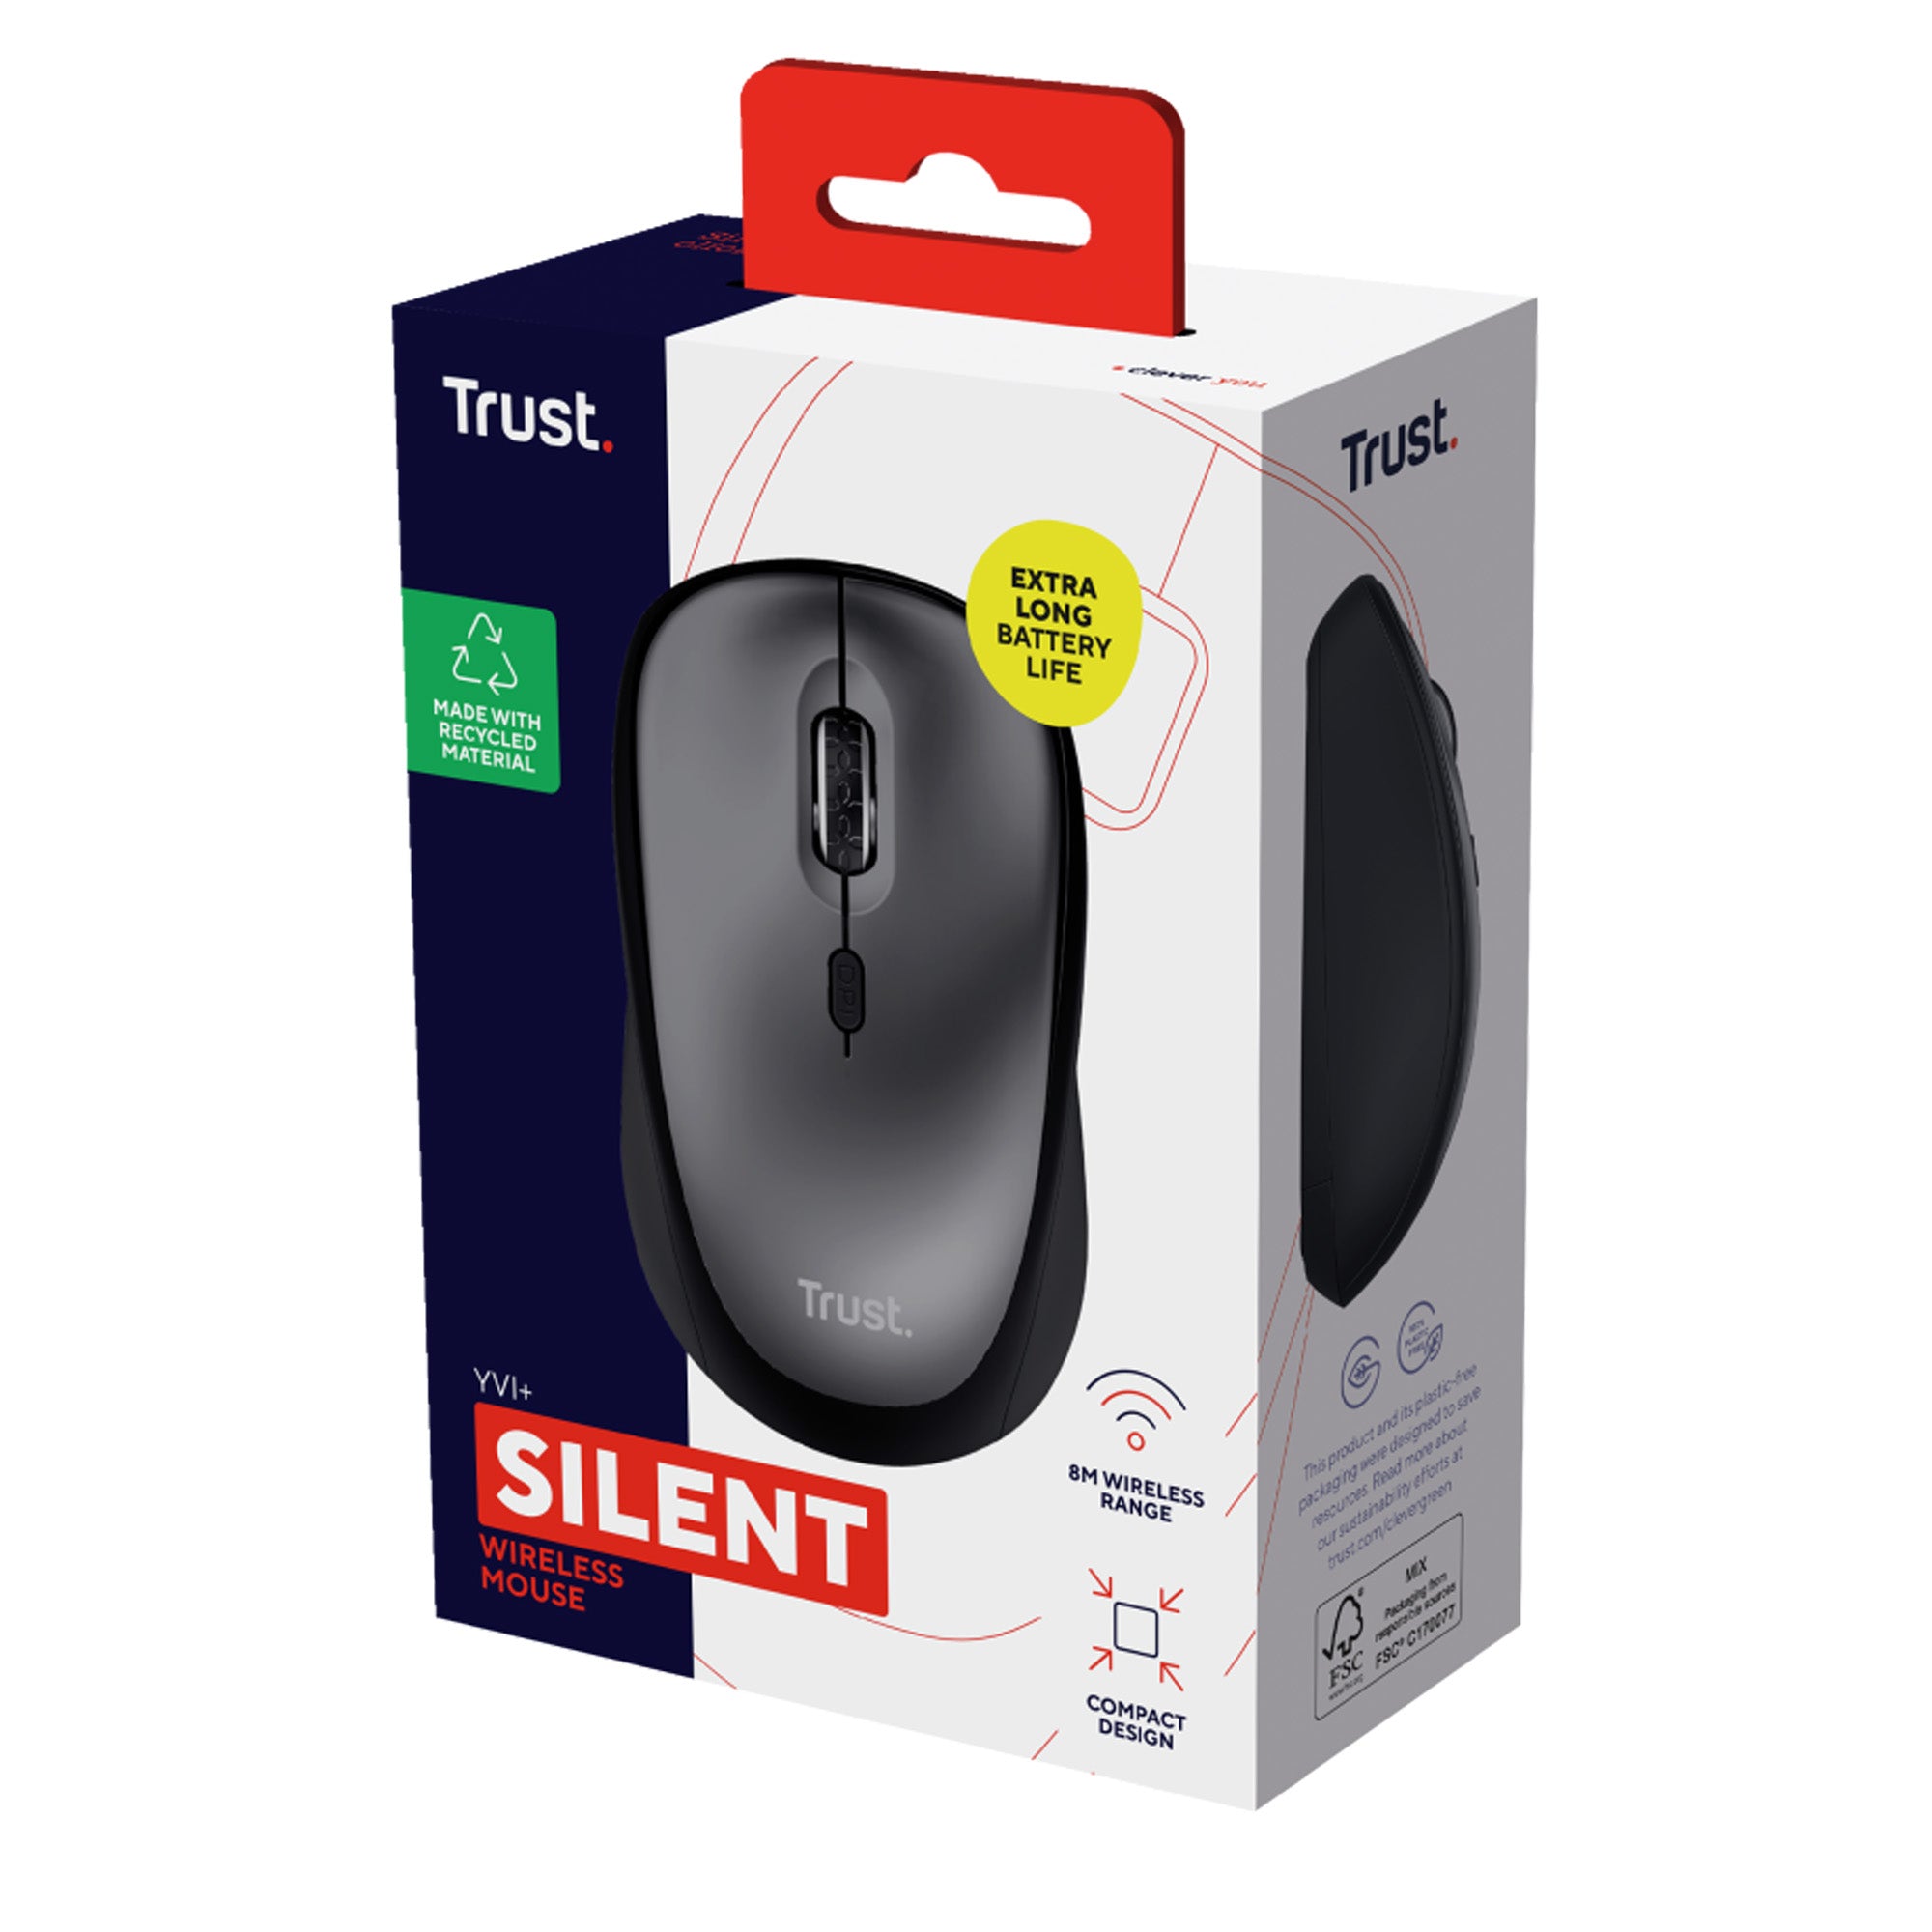 trust-mouse-wireless-silenzioso-yvi